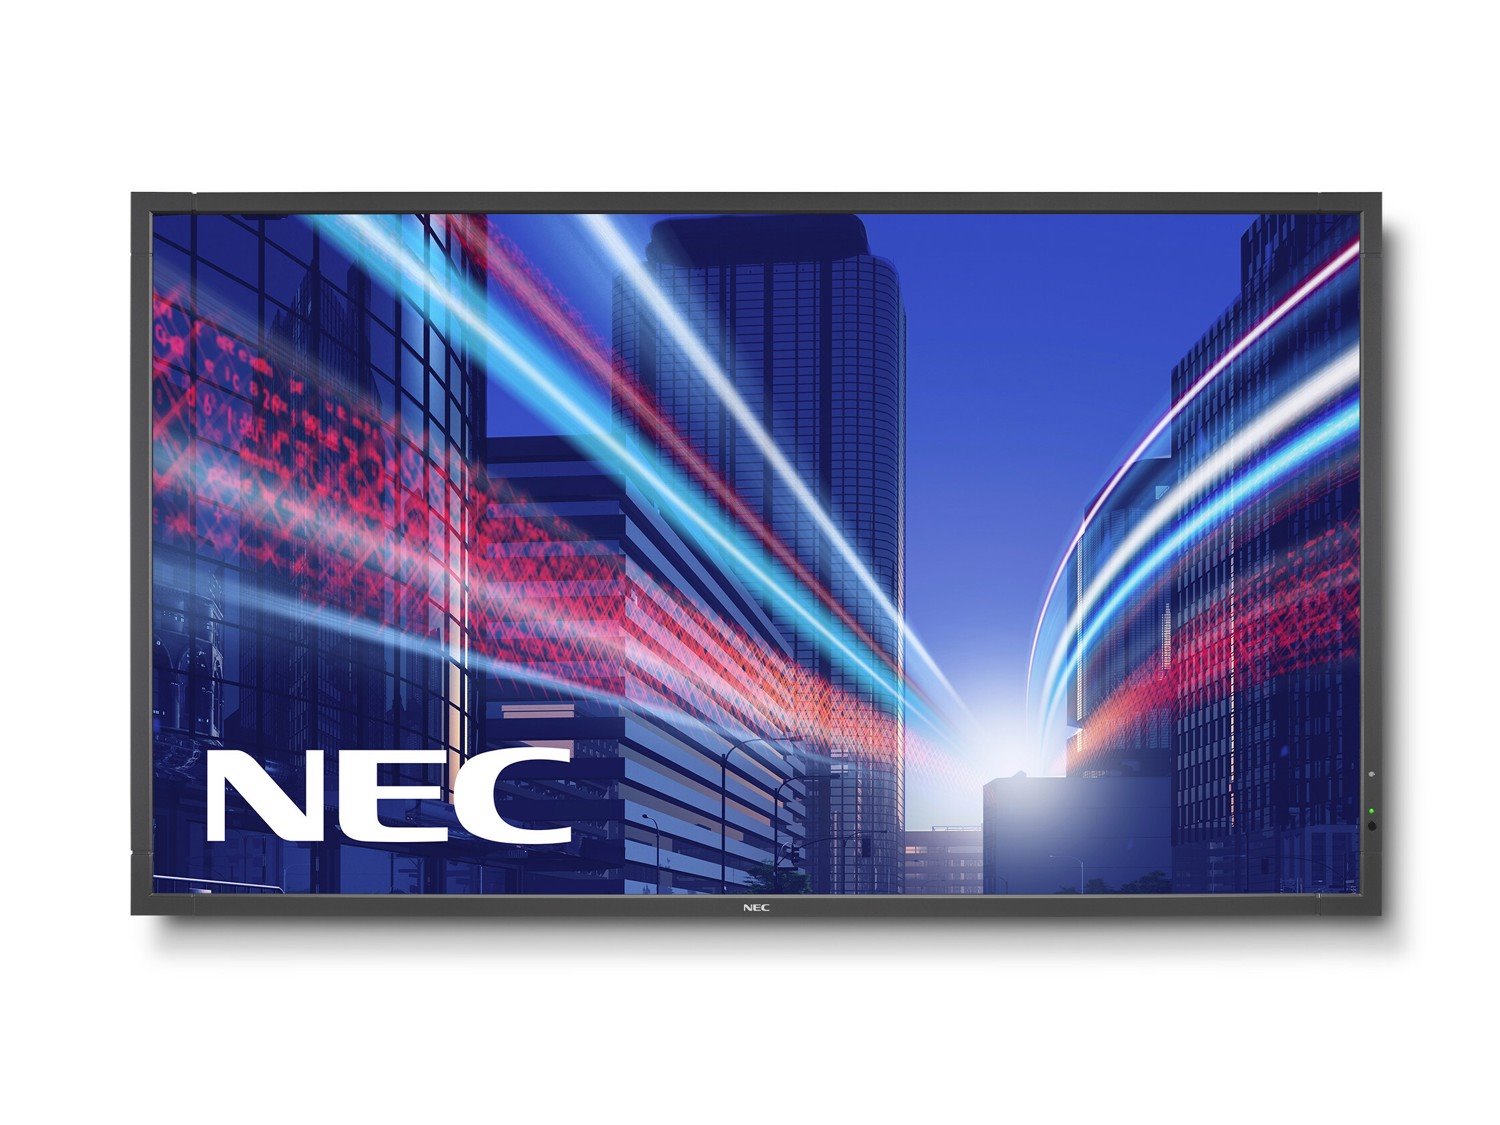 NEC Display 47" LED Backlit High Brightness Display